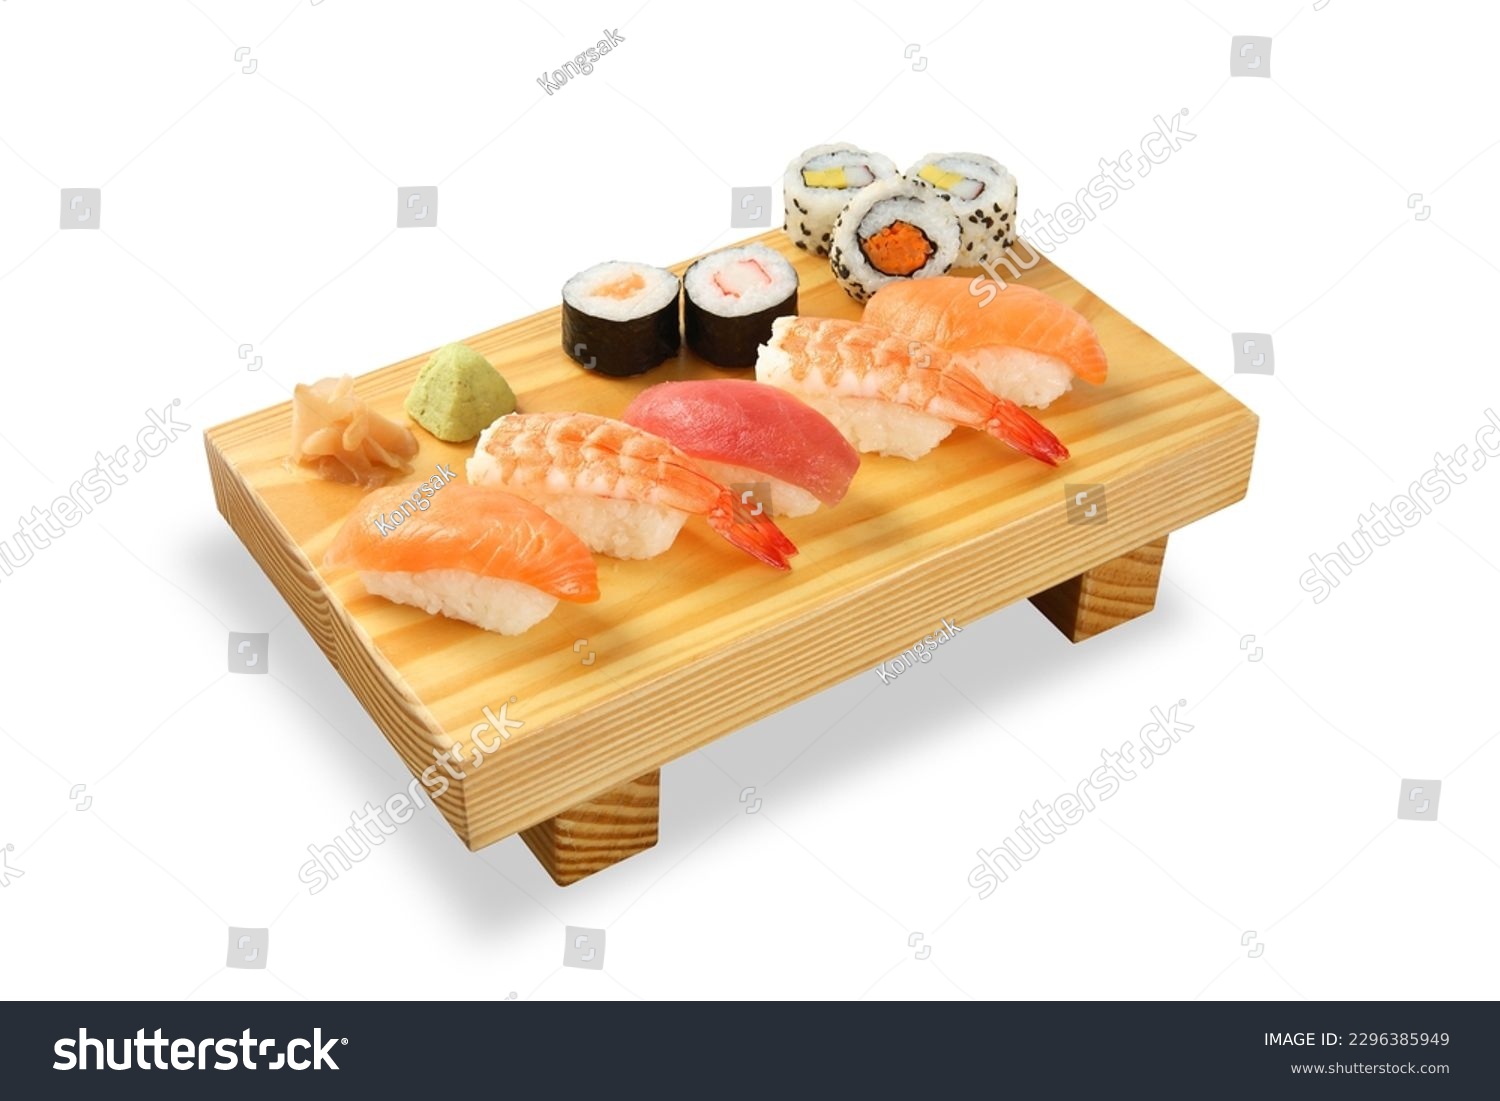 Sushi Rolls on bamboo board isolated on White background #2296385949